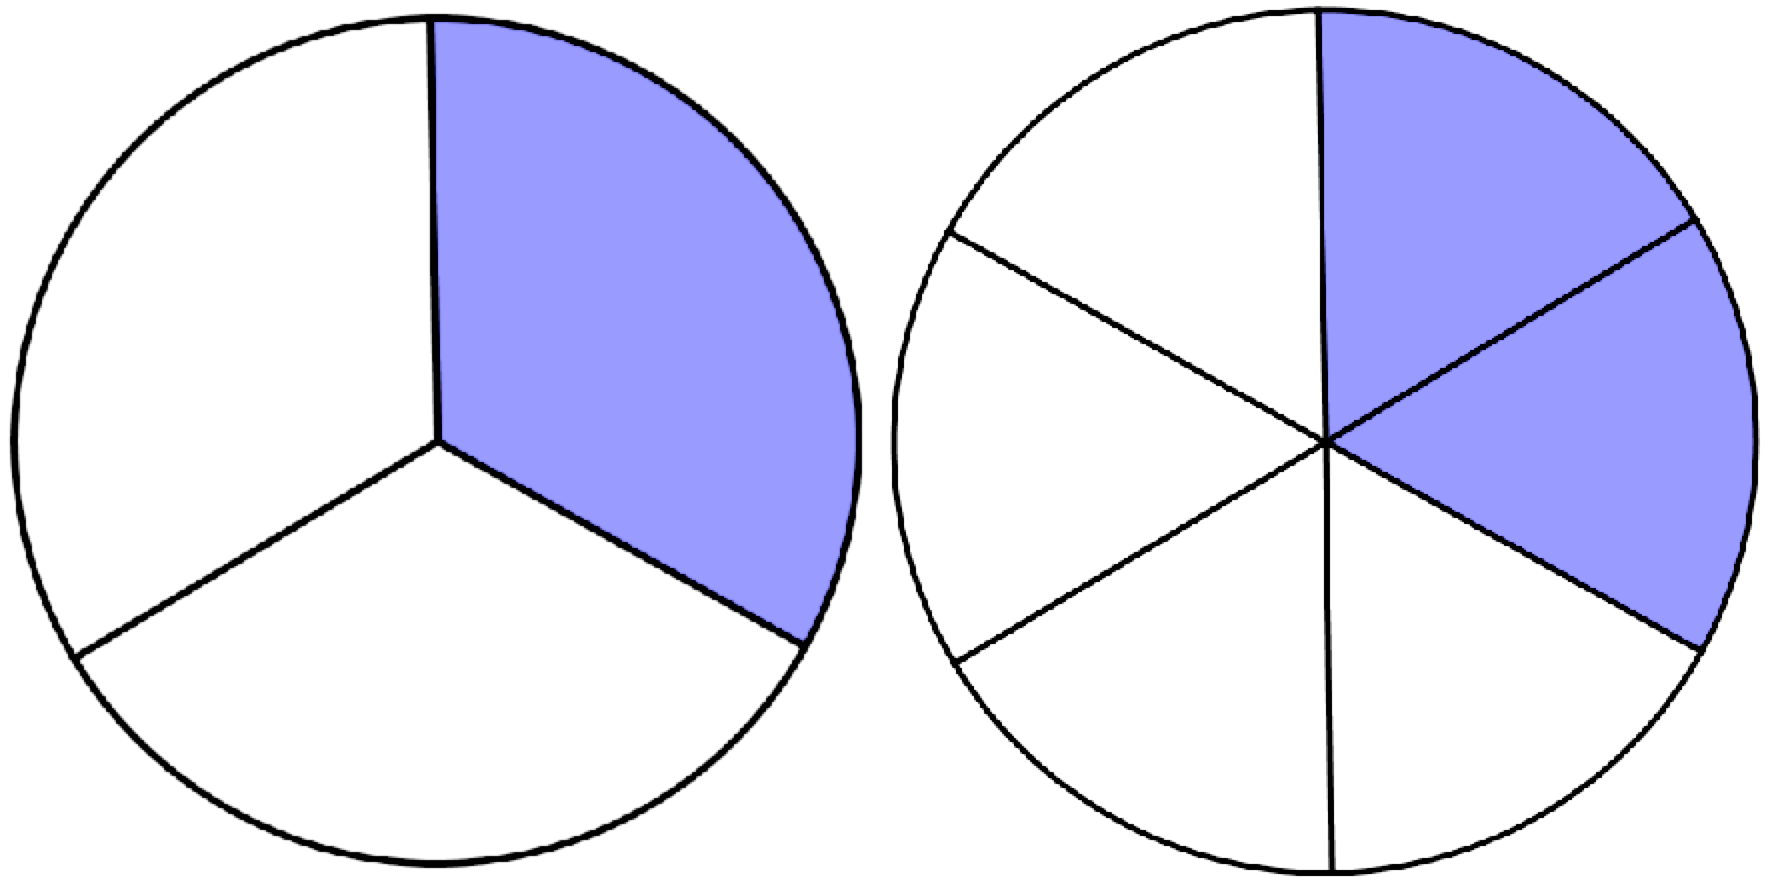 equivalent-fractions-math-wiki-fandom